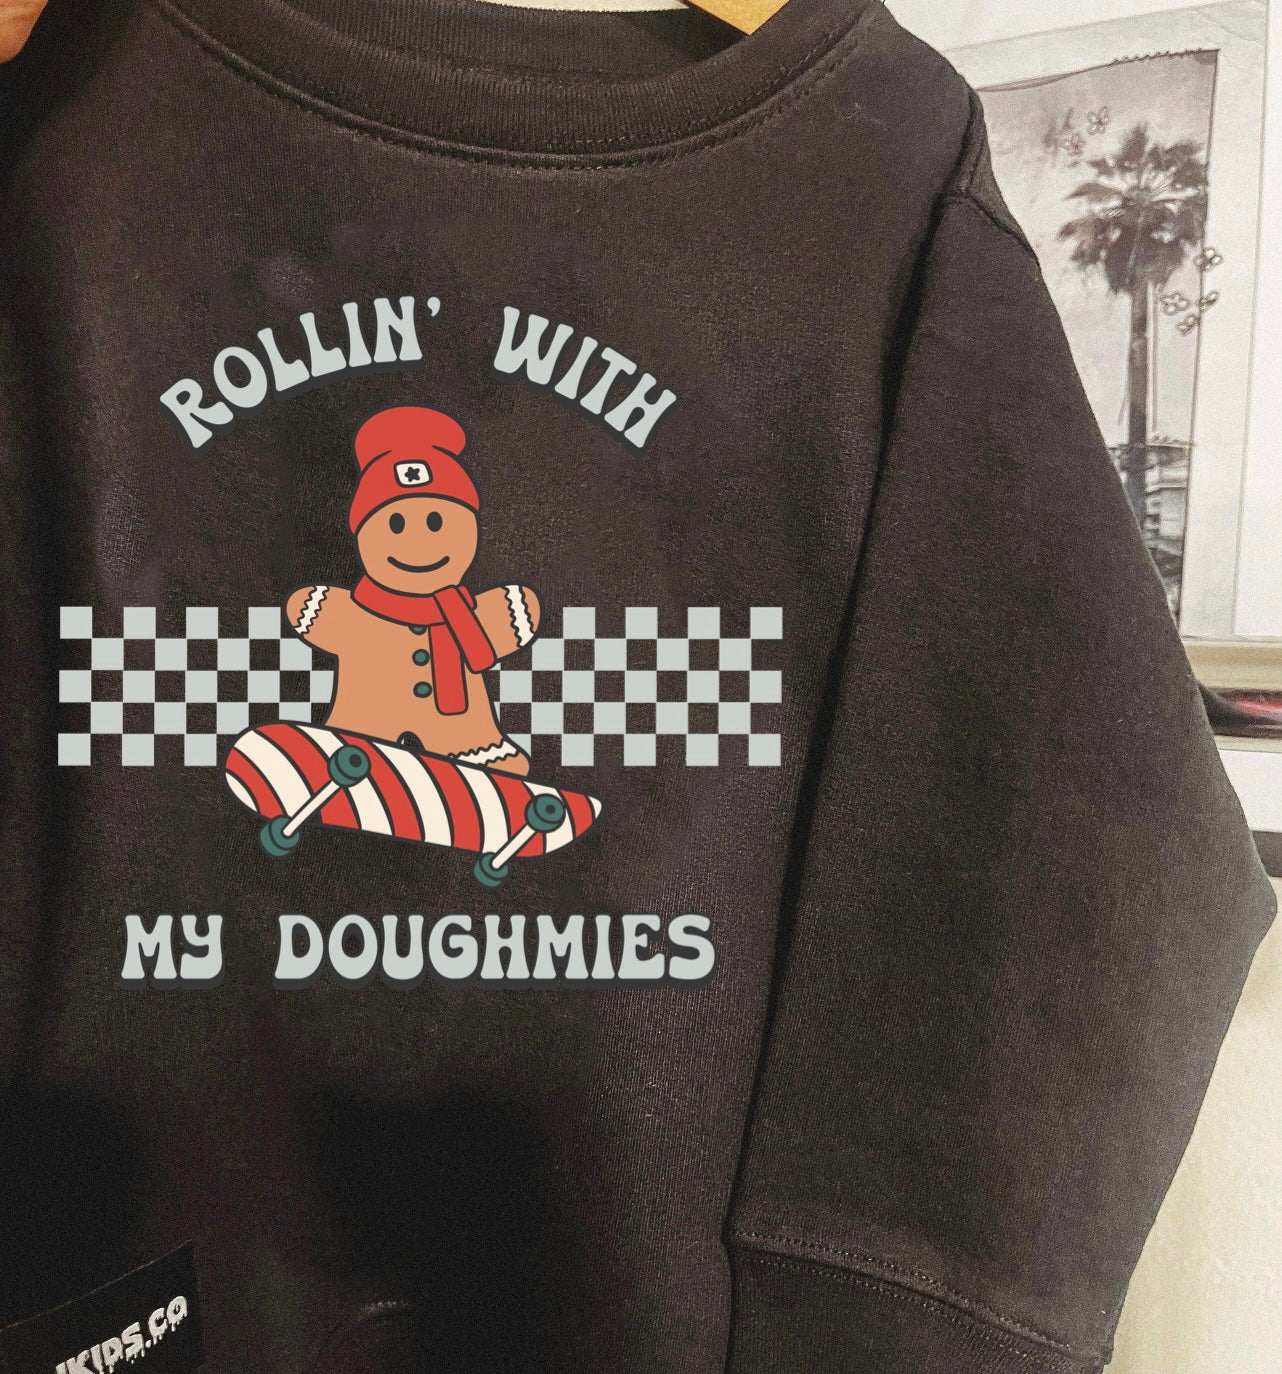 Rollin with my doughmies sweatshirt